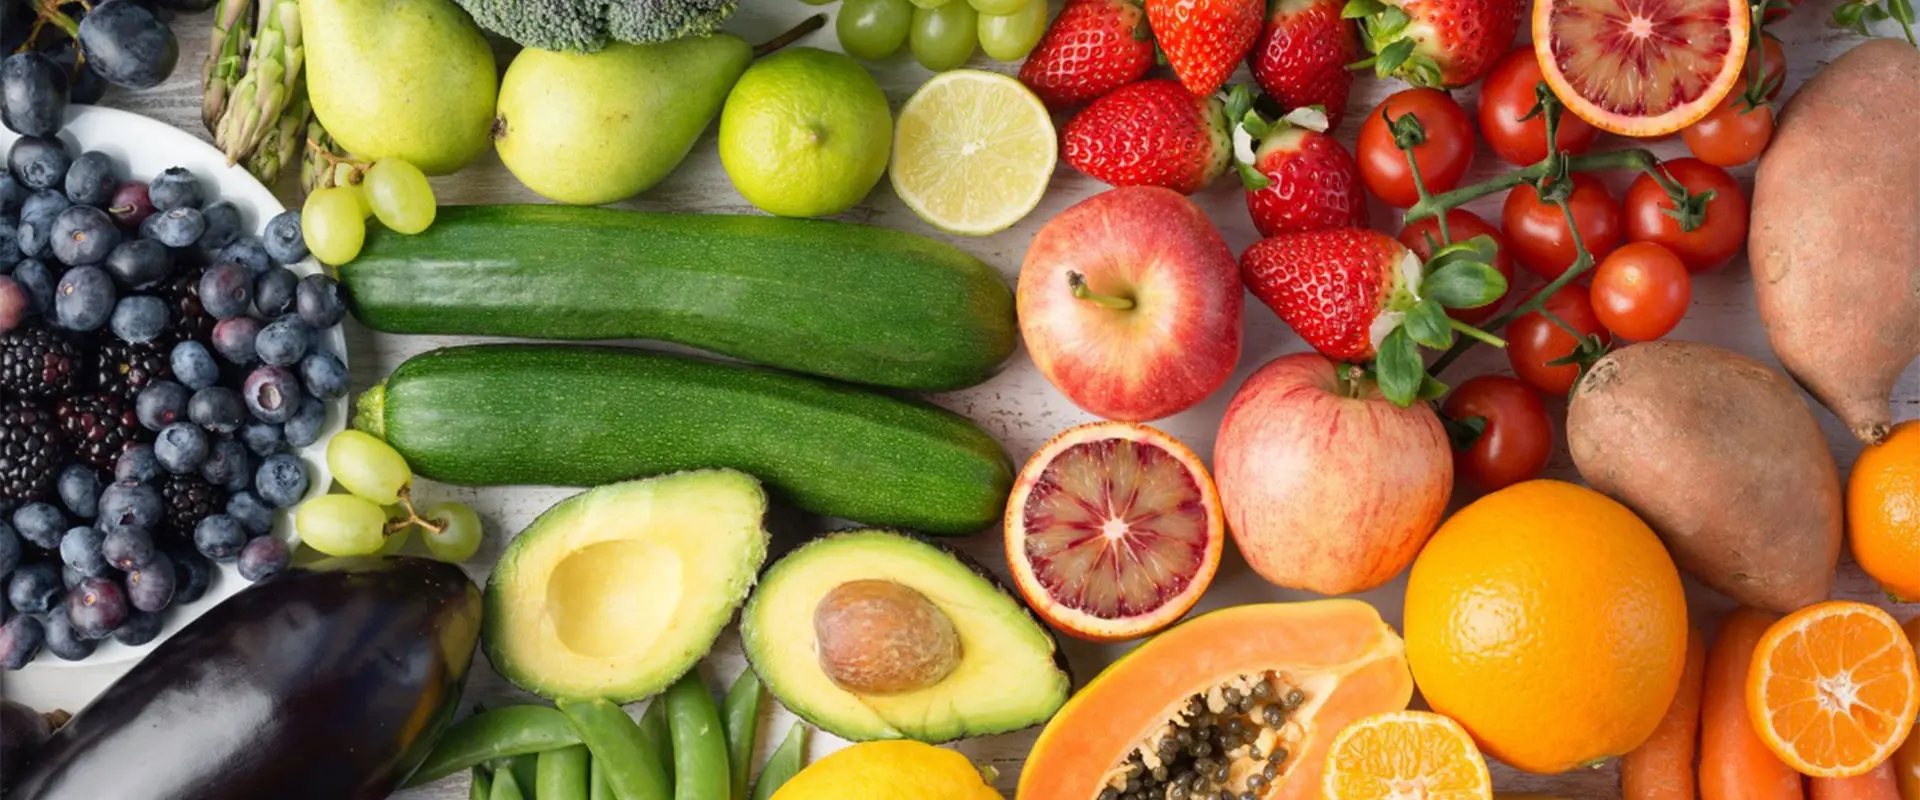 Fruta orgánica y polvo vegetal